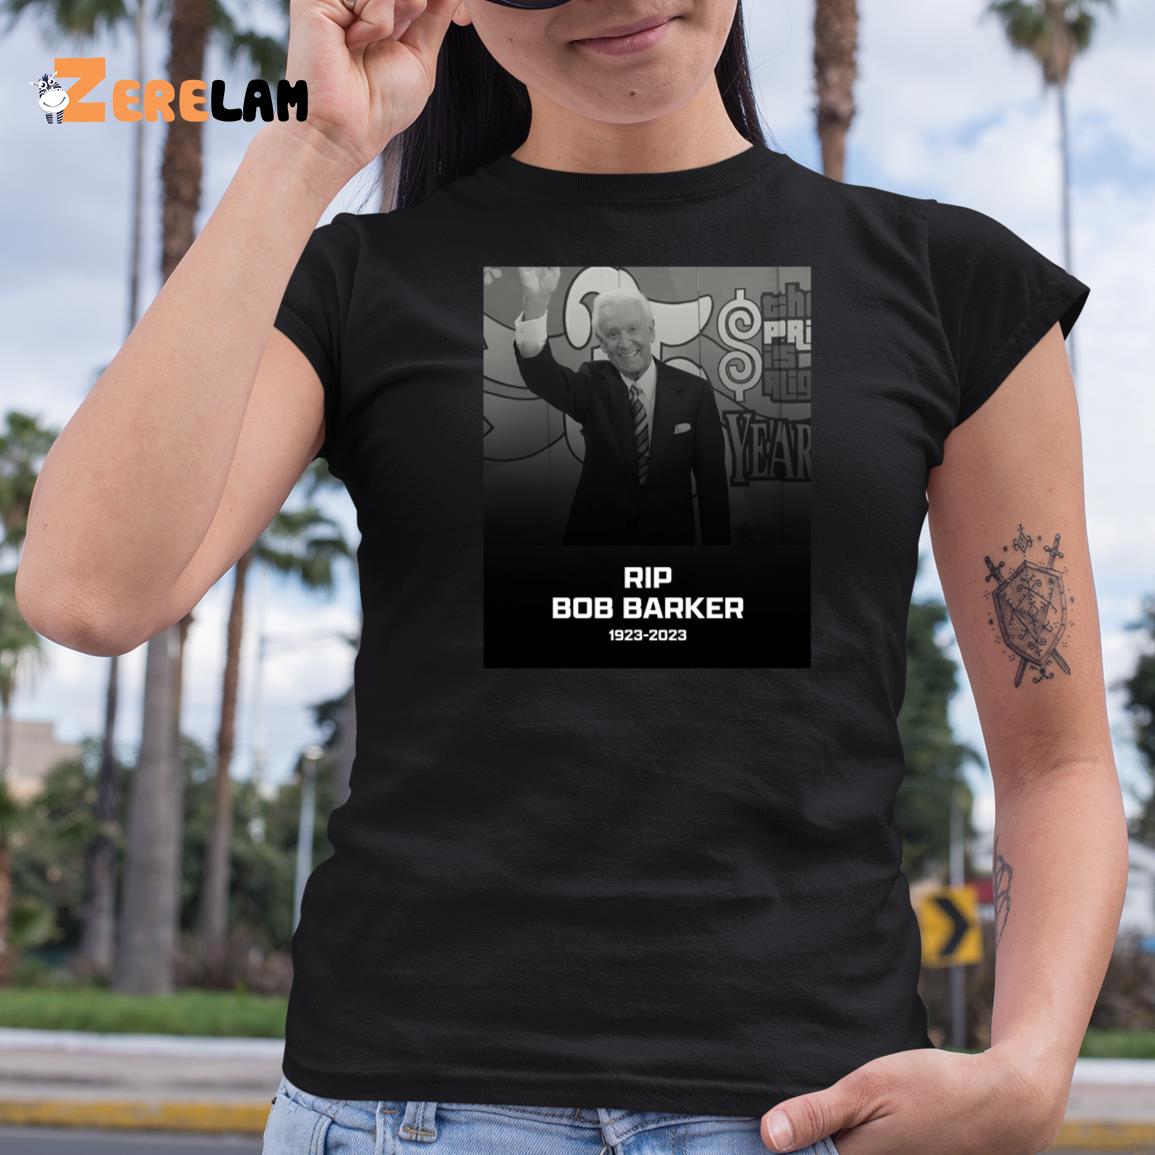 Rip Bob Barker Shirt The Price is Right - Zerelam